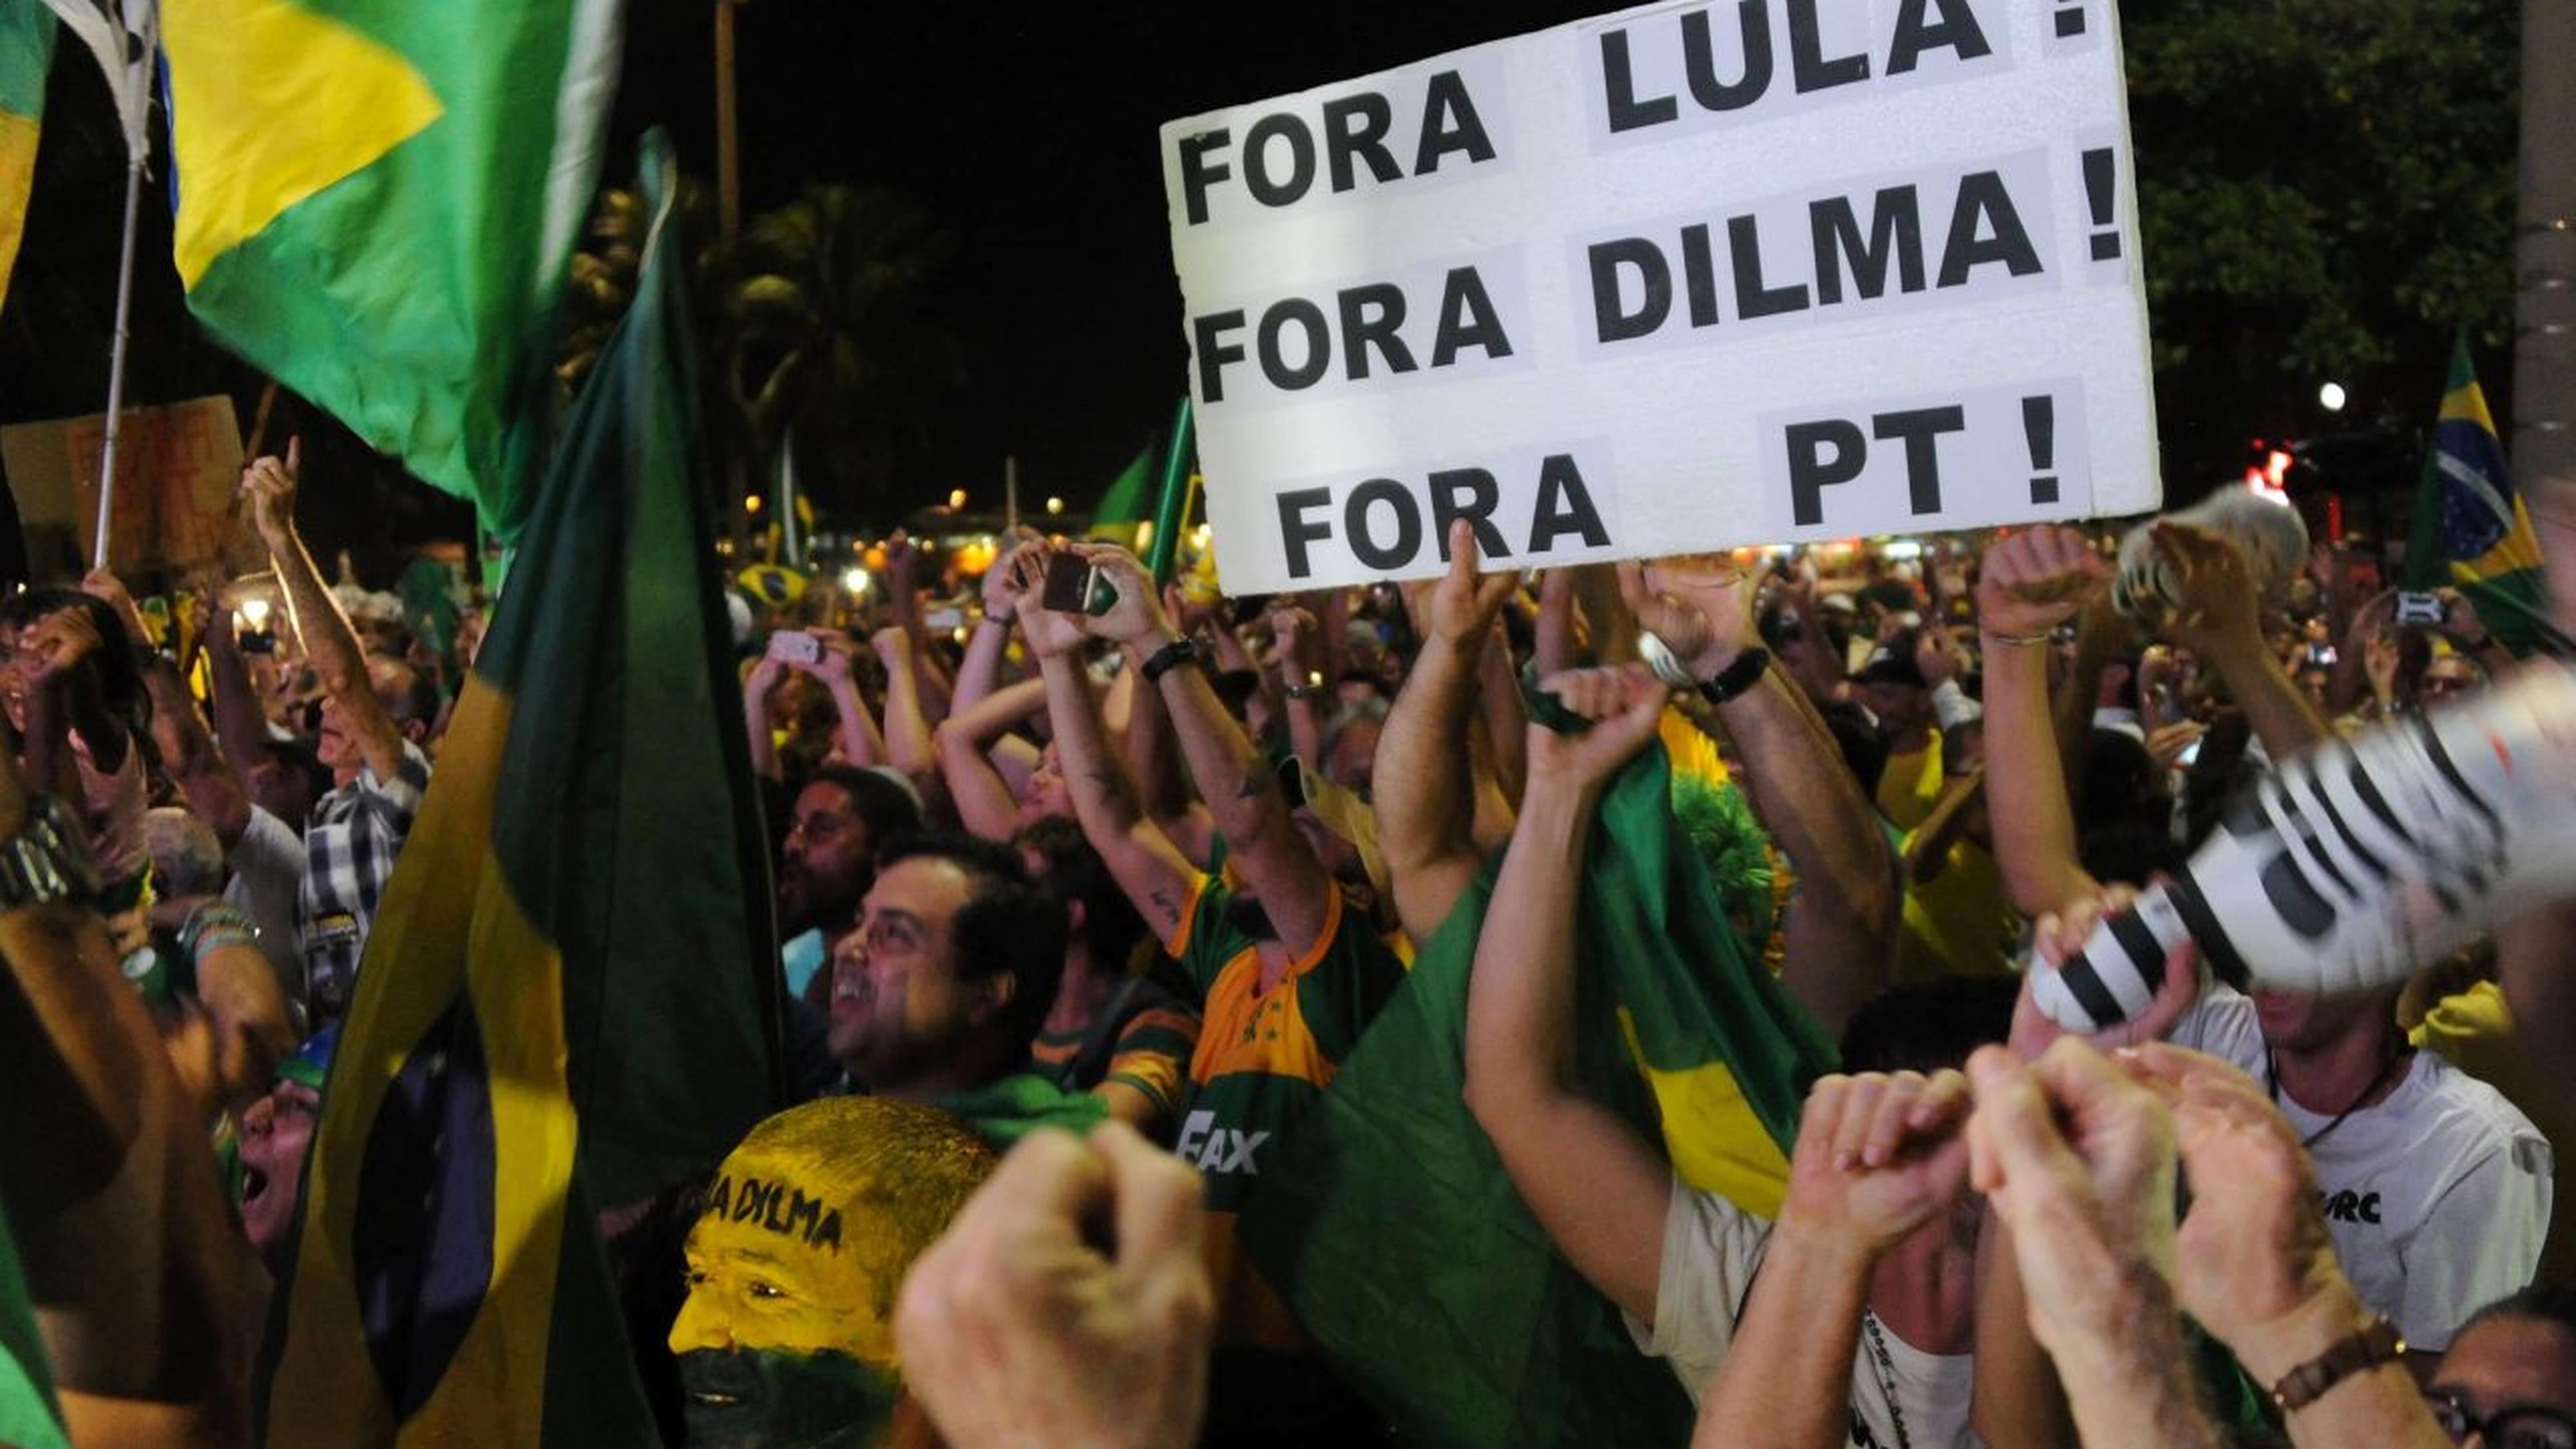 Evangélicos no Brasil - do impeachment de Dilma Rousseff ao tempo